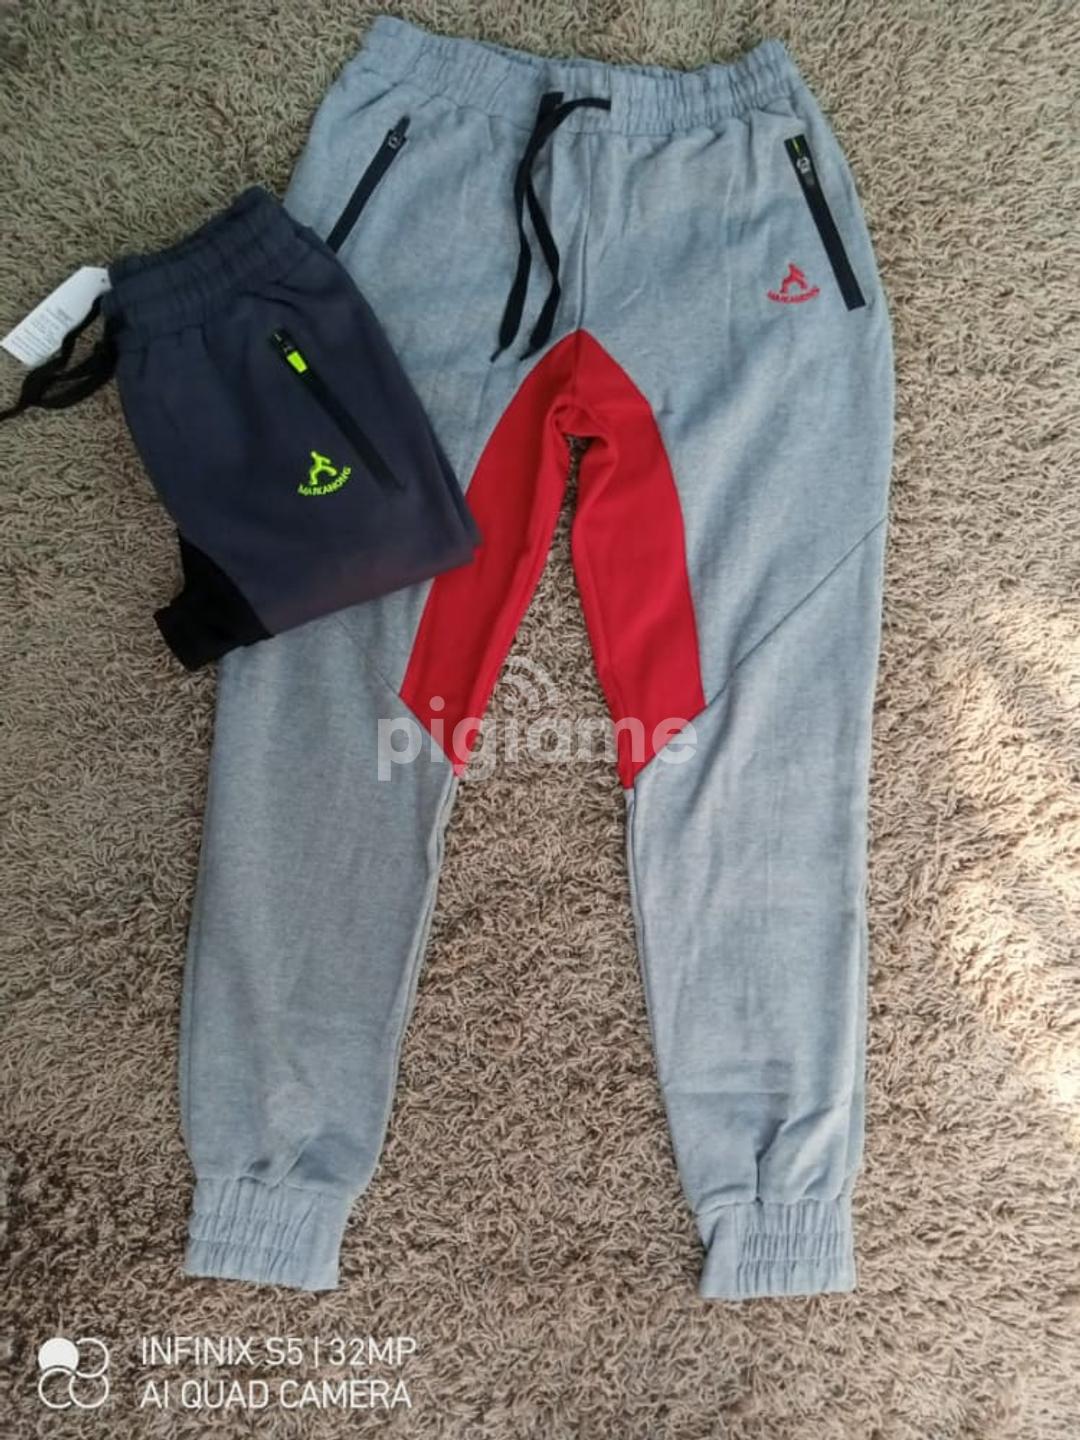 Sweatpants For Sale in Nairobi CBD | PigiaMe